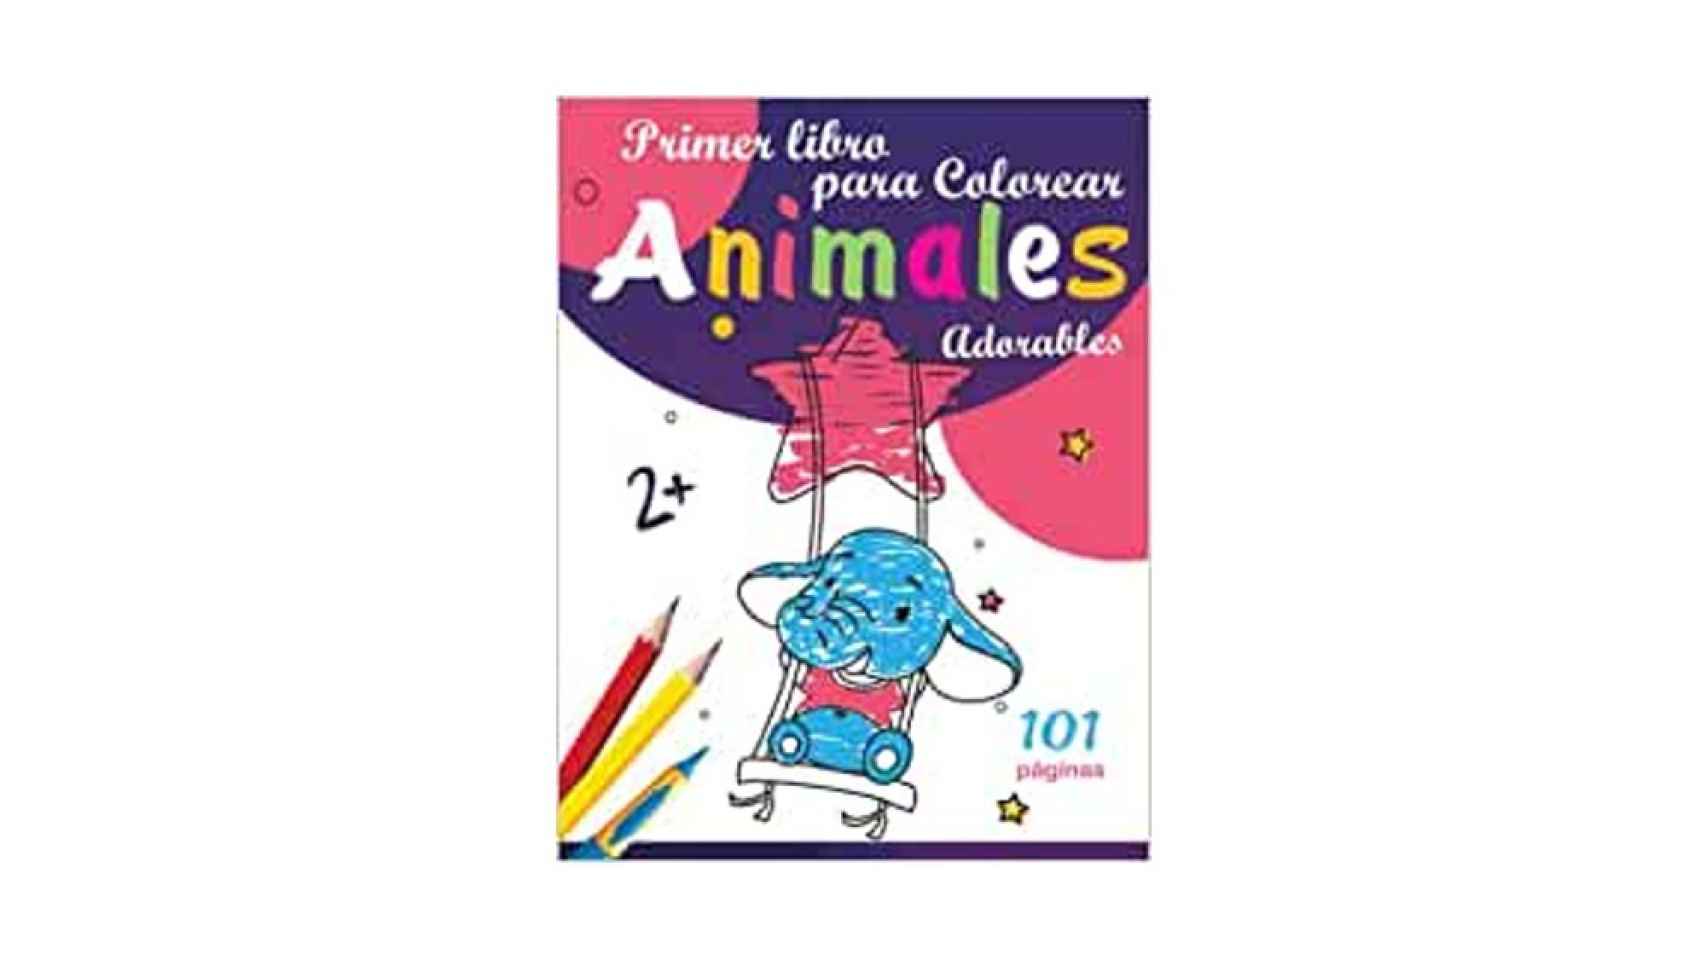 'Primer libro para colorear_ Animales adorables'